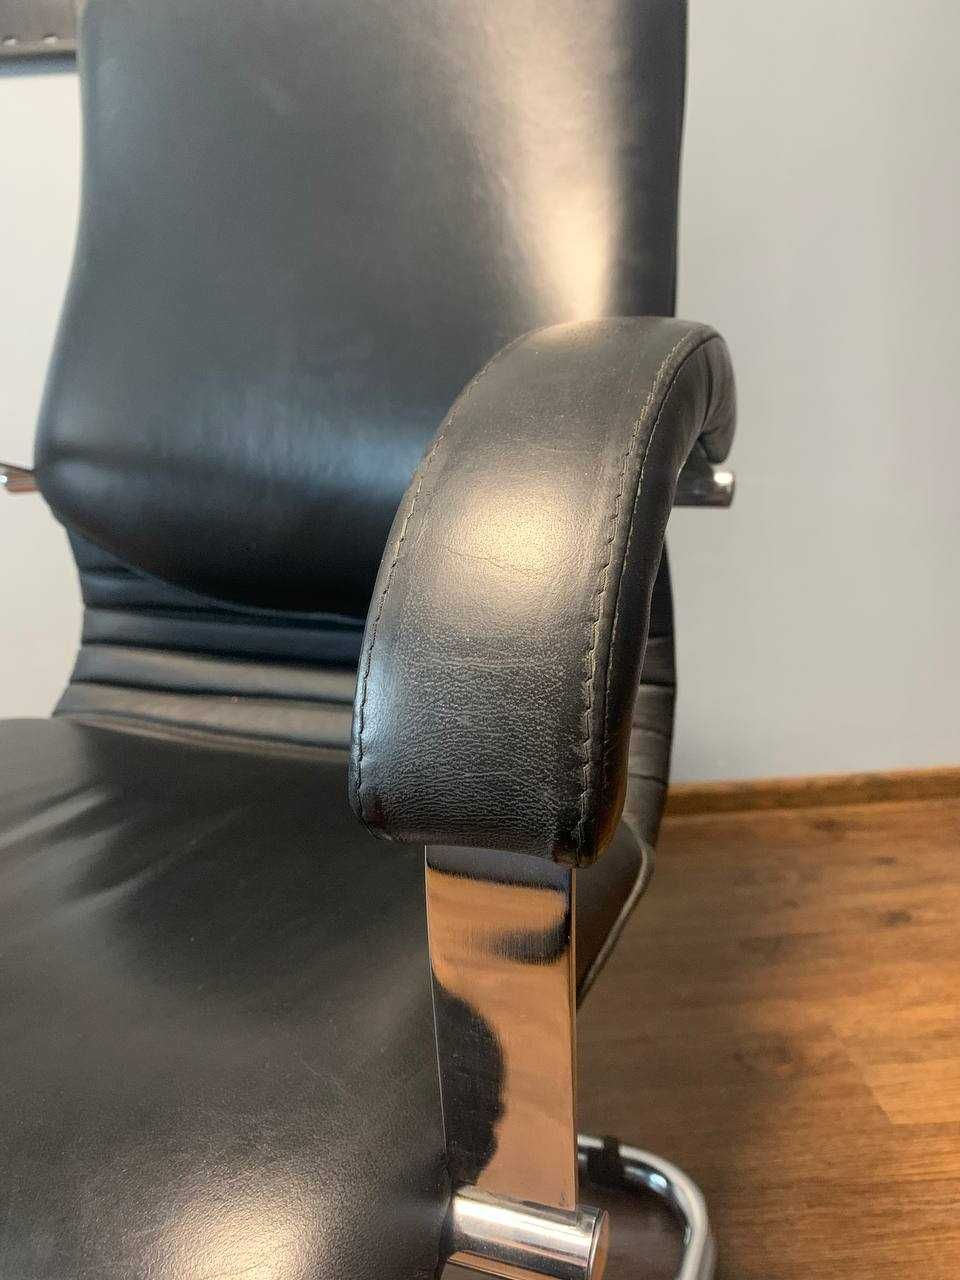 Кресло стул Ника CF крісло